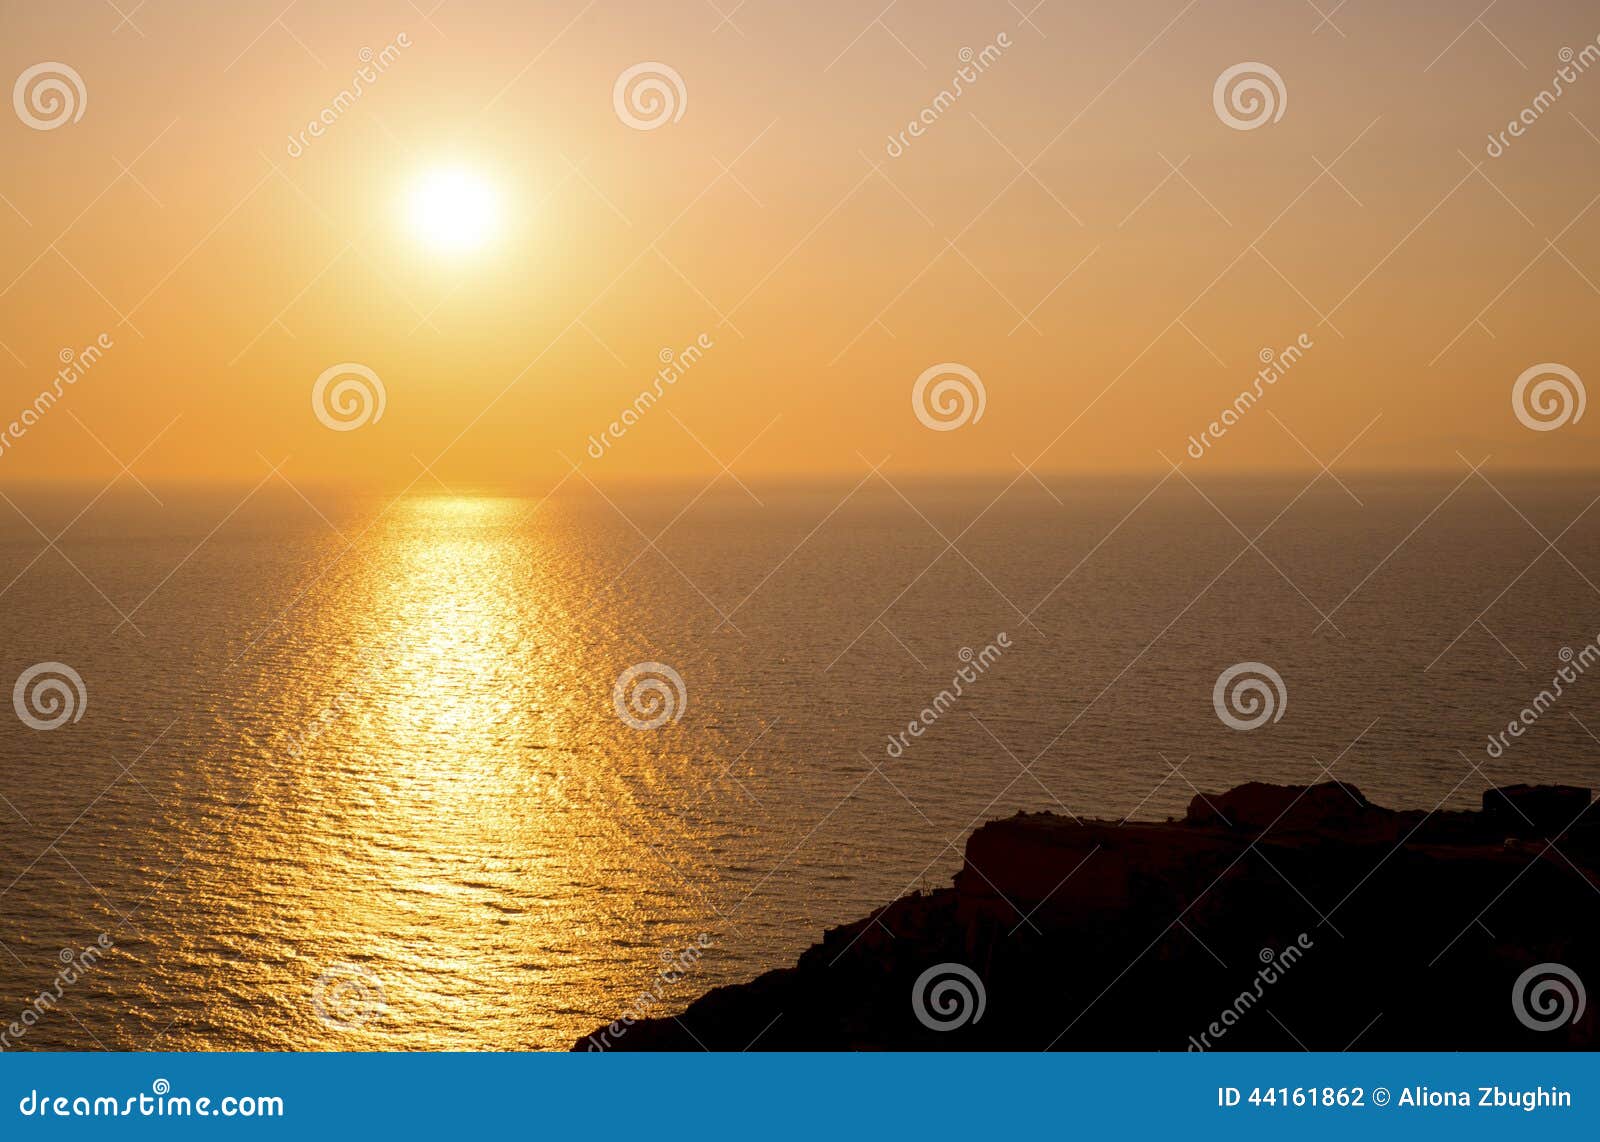 sunset in the aegean sea